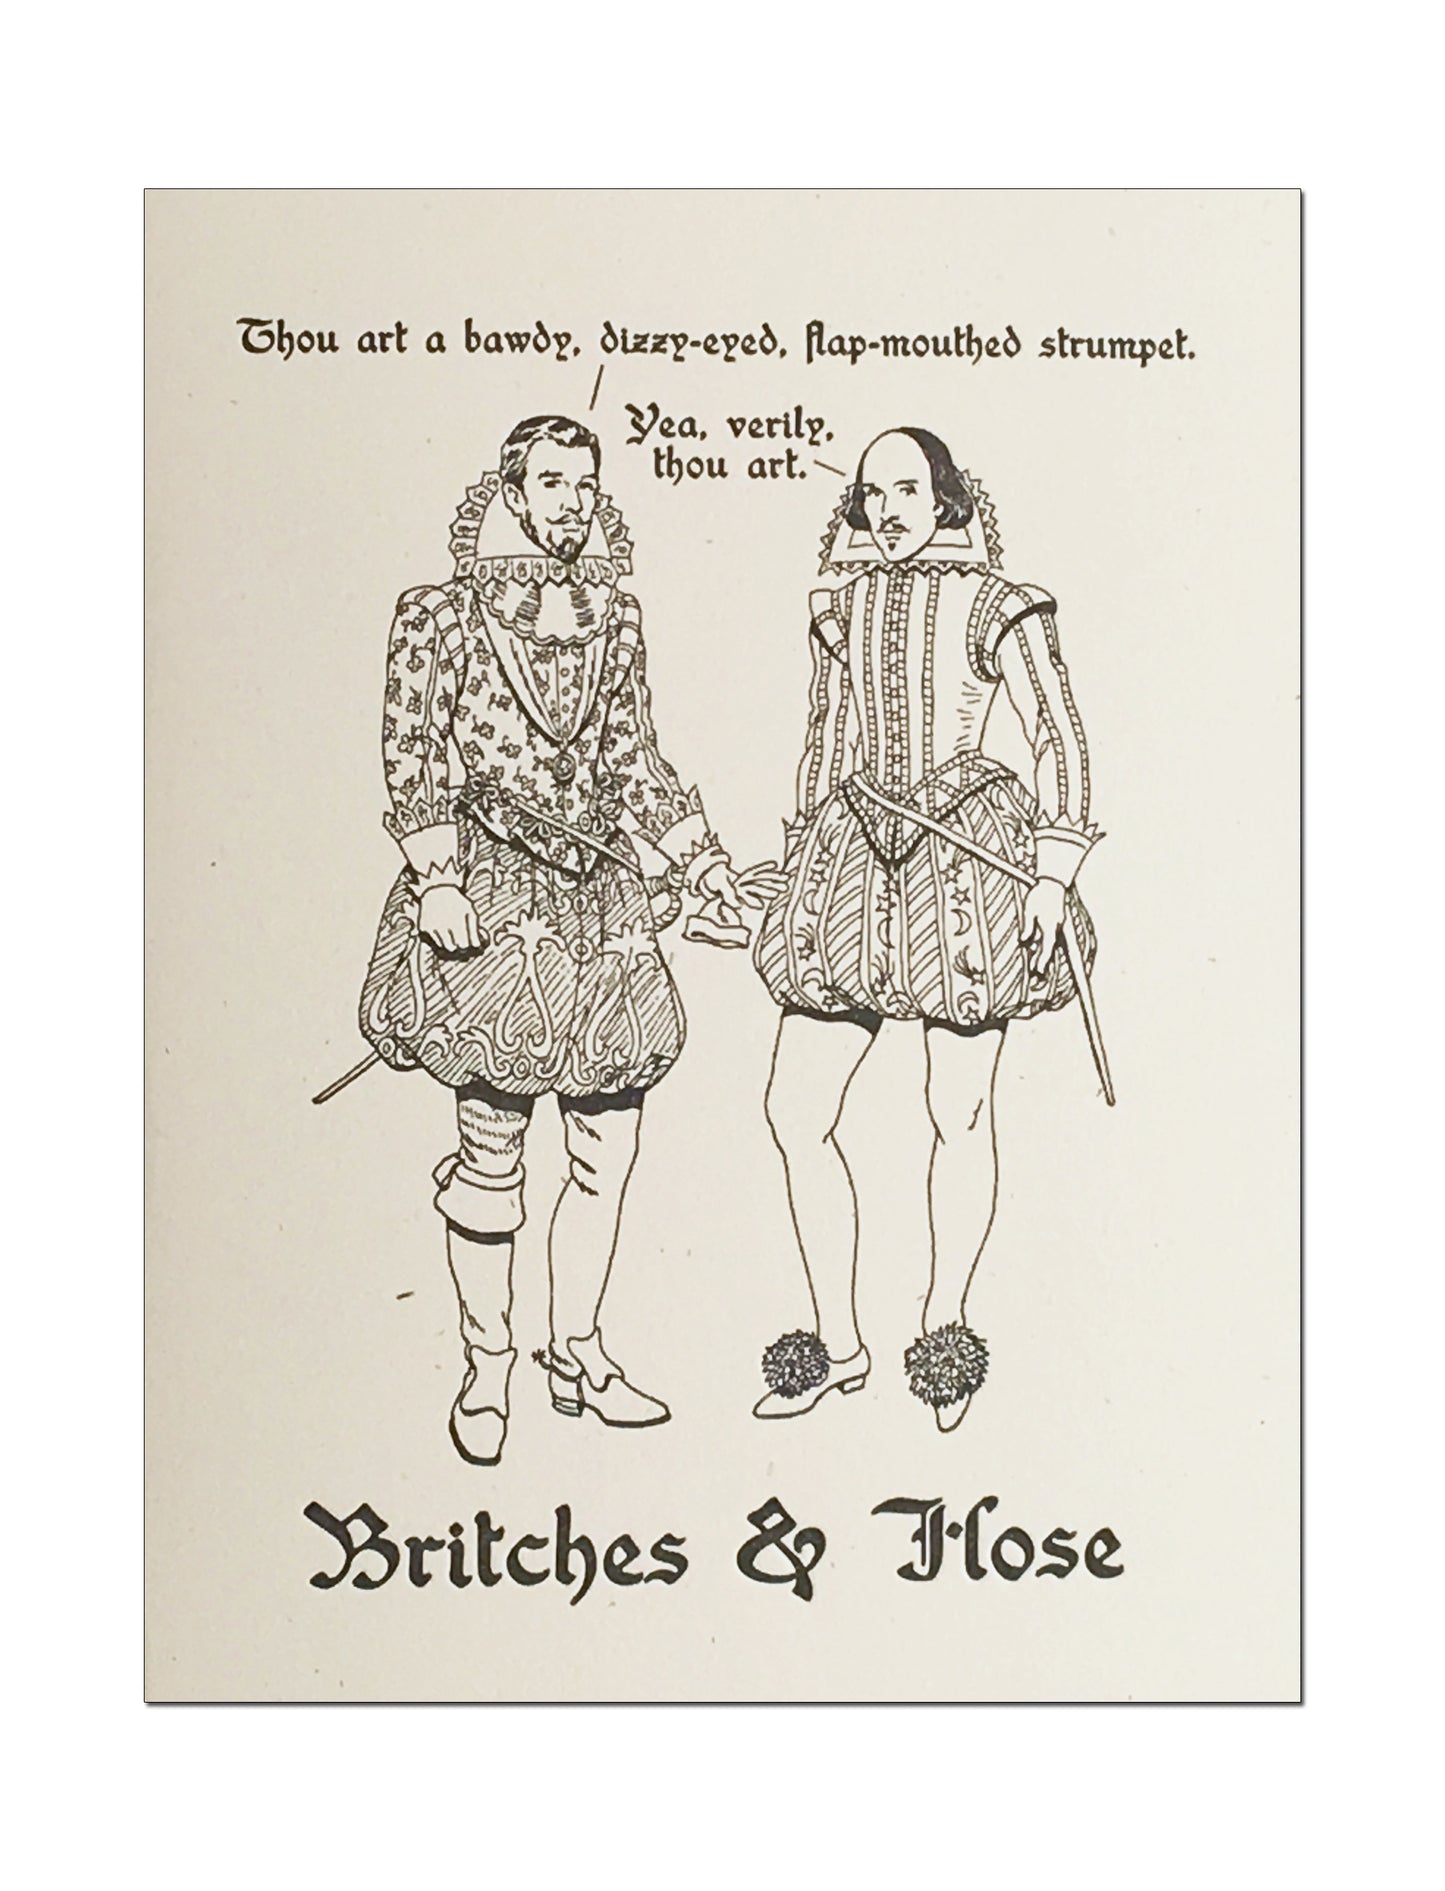 Britches & Hose. Series Original. Letterpress Greeting Card.